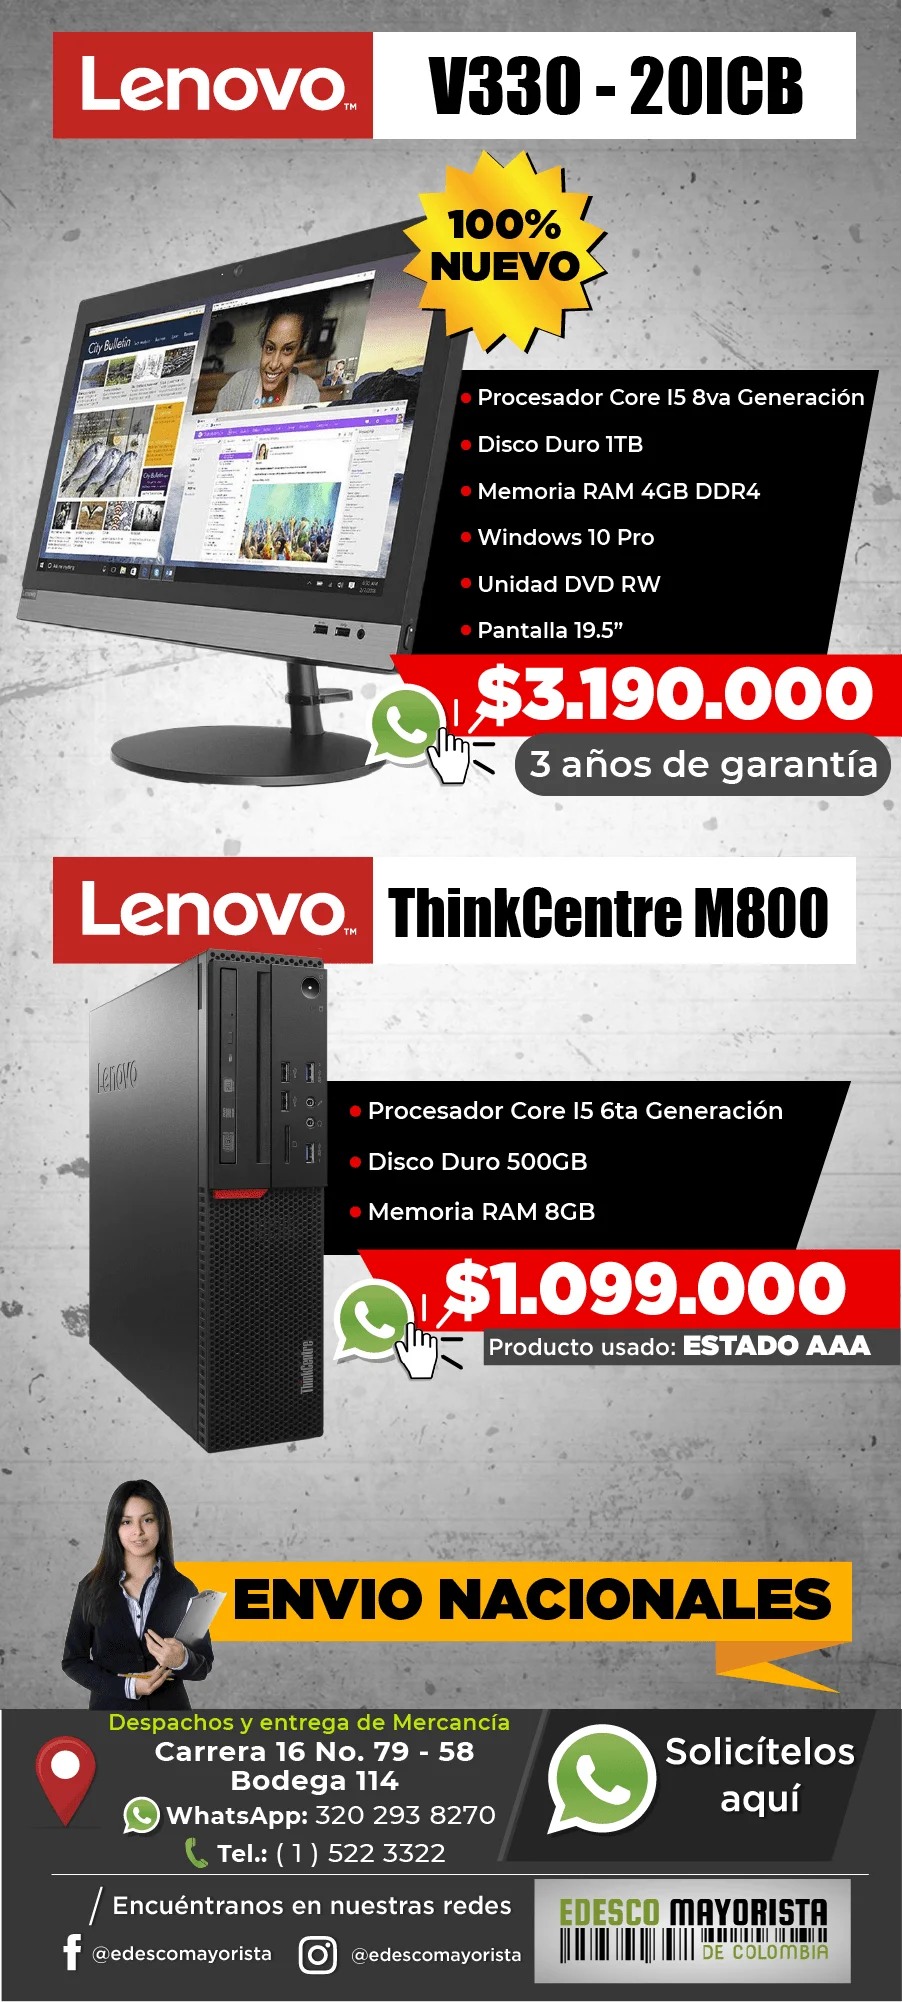 ThinkCentre Lenovo M800